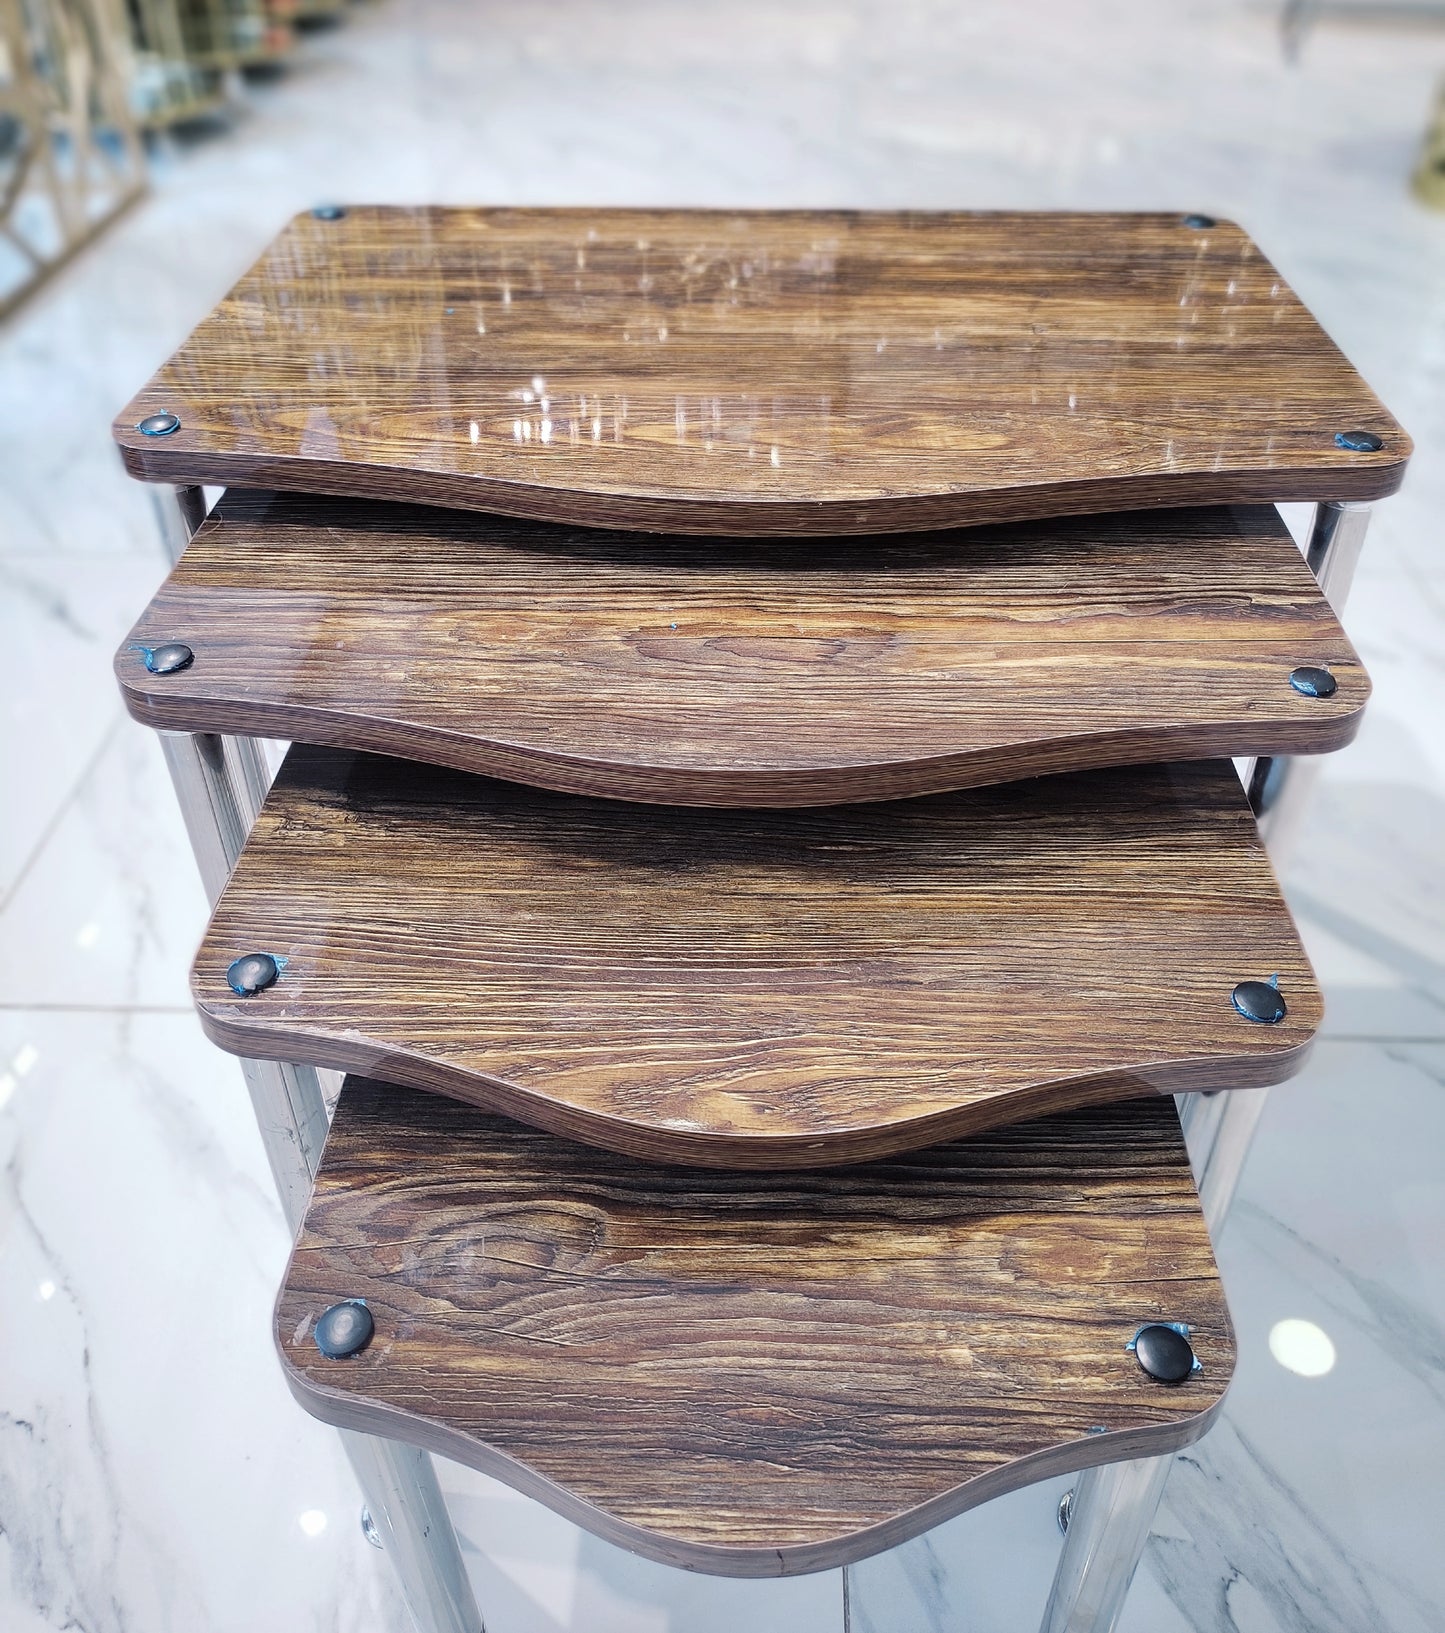 4 Pcs Wooden Top Table Set (brown)